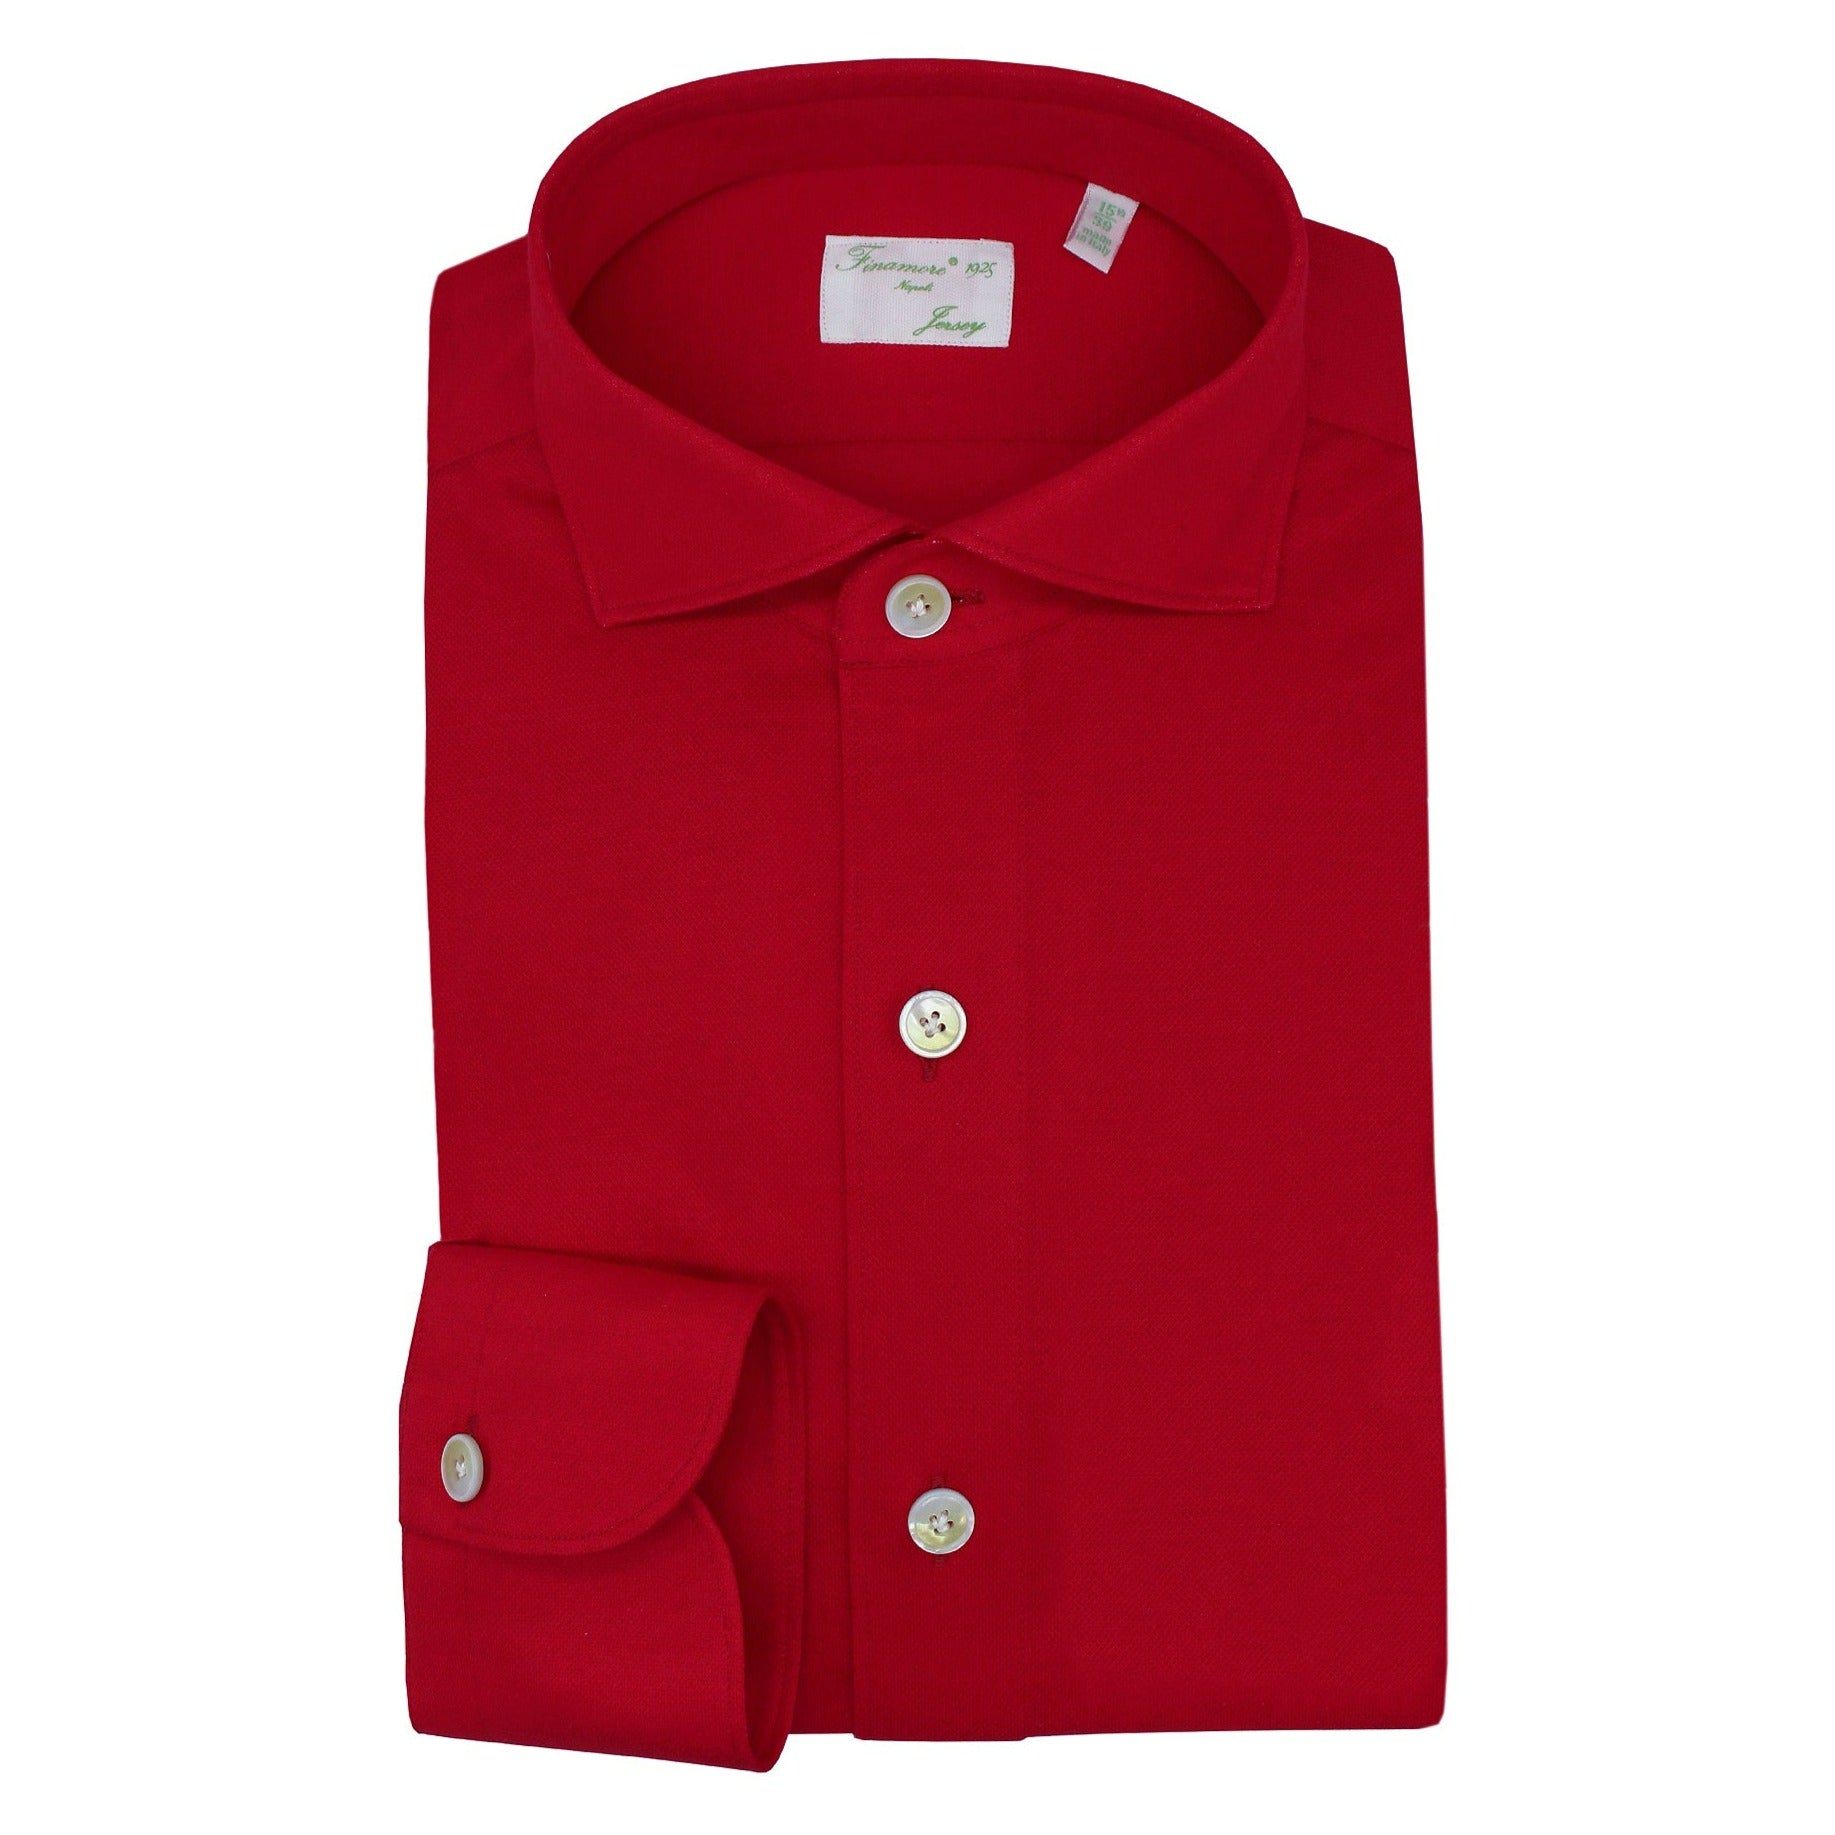 Toronto cotton jersey red slim fit shirt